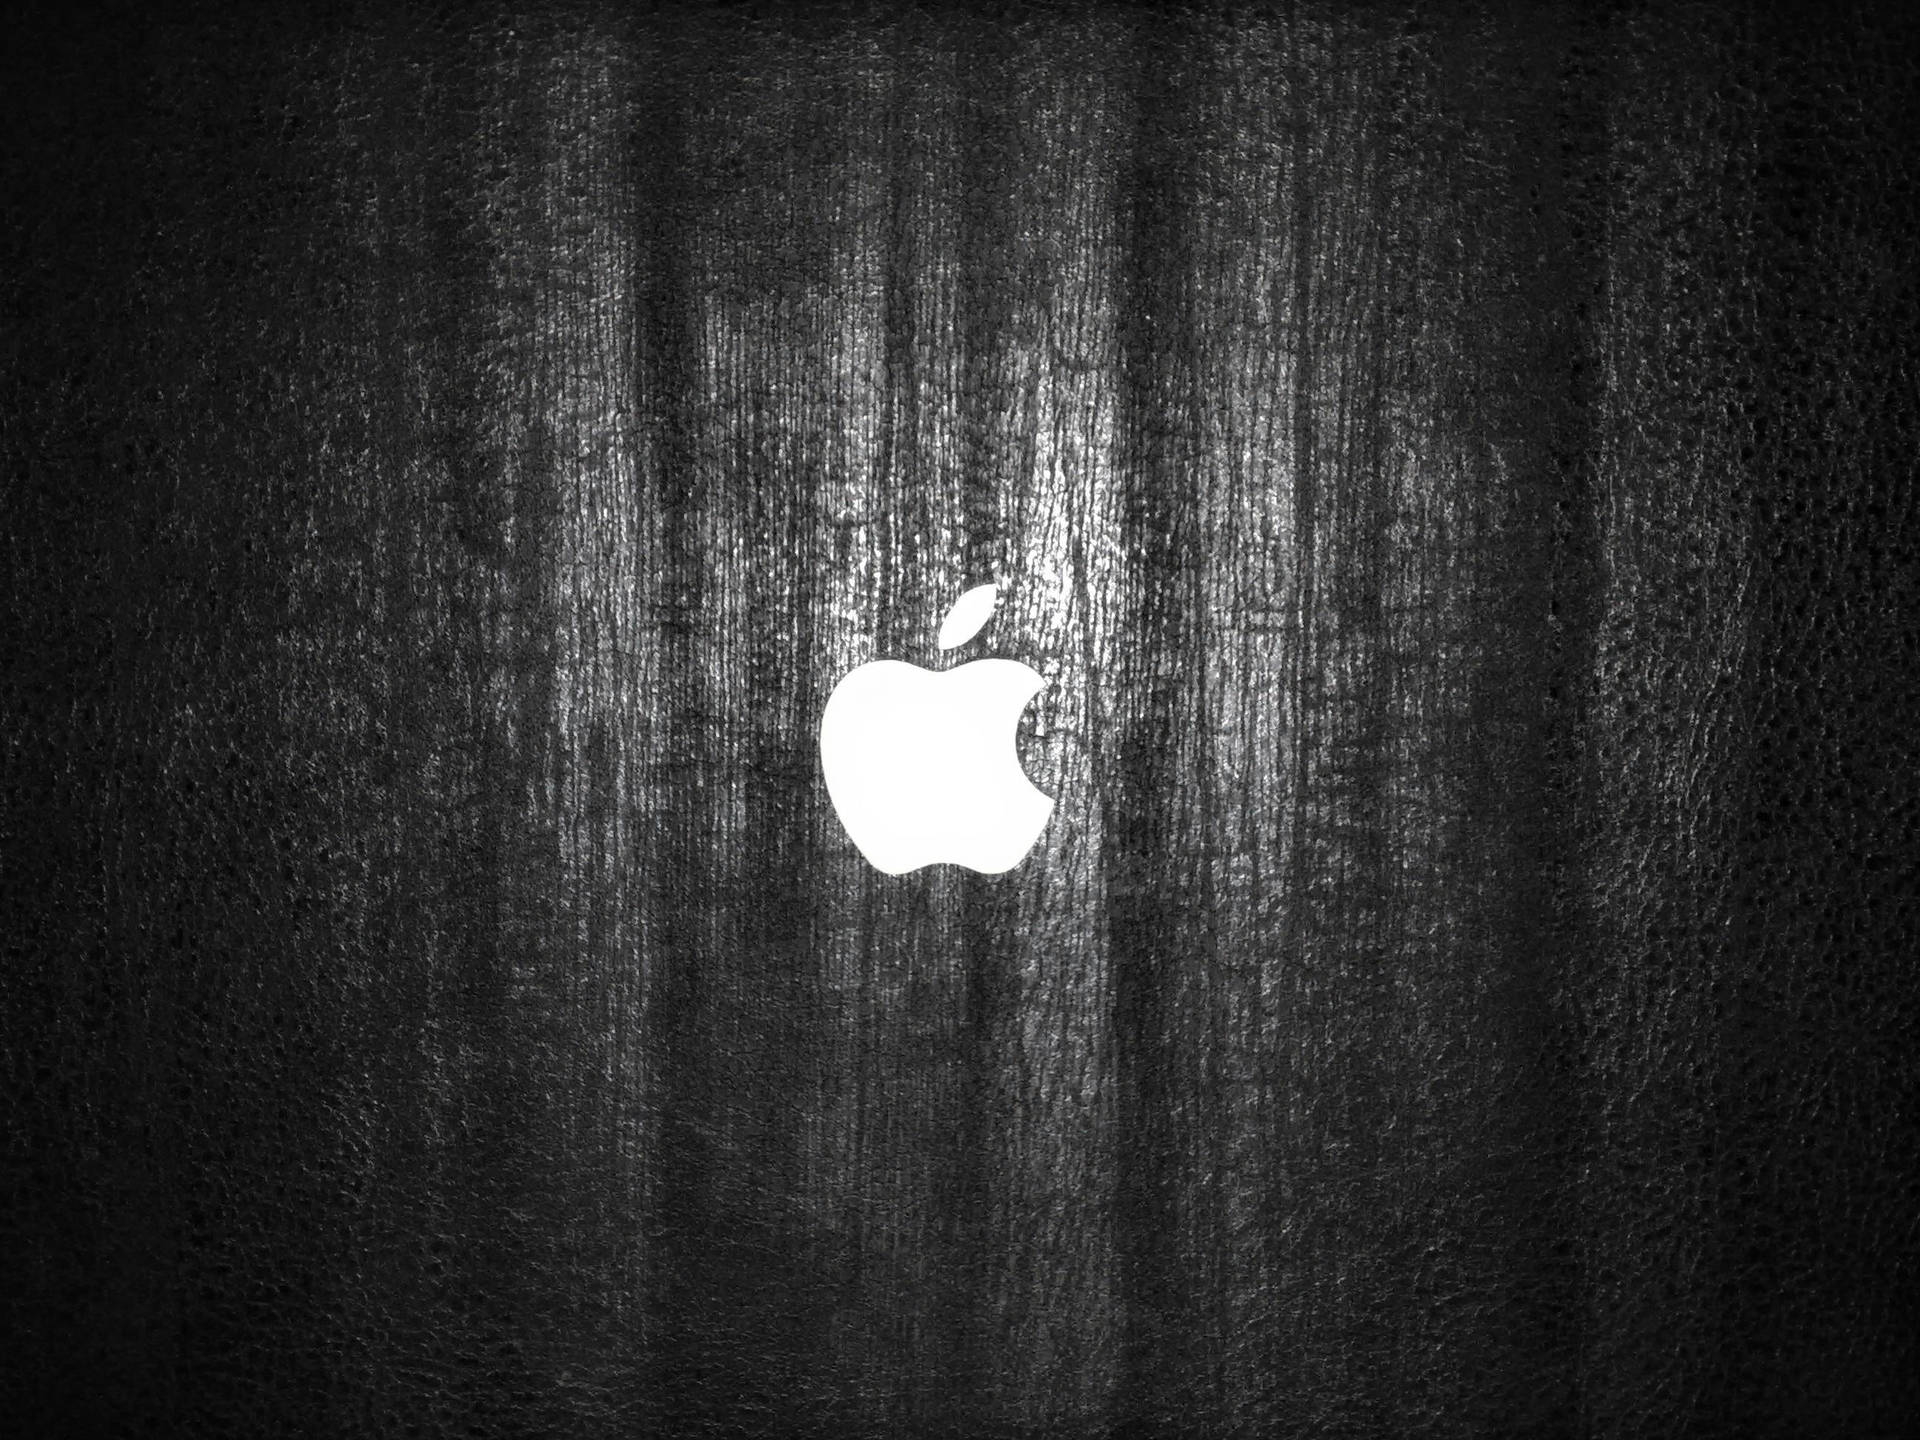 White Apple Logo 4k Background